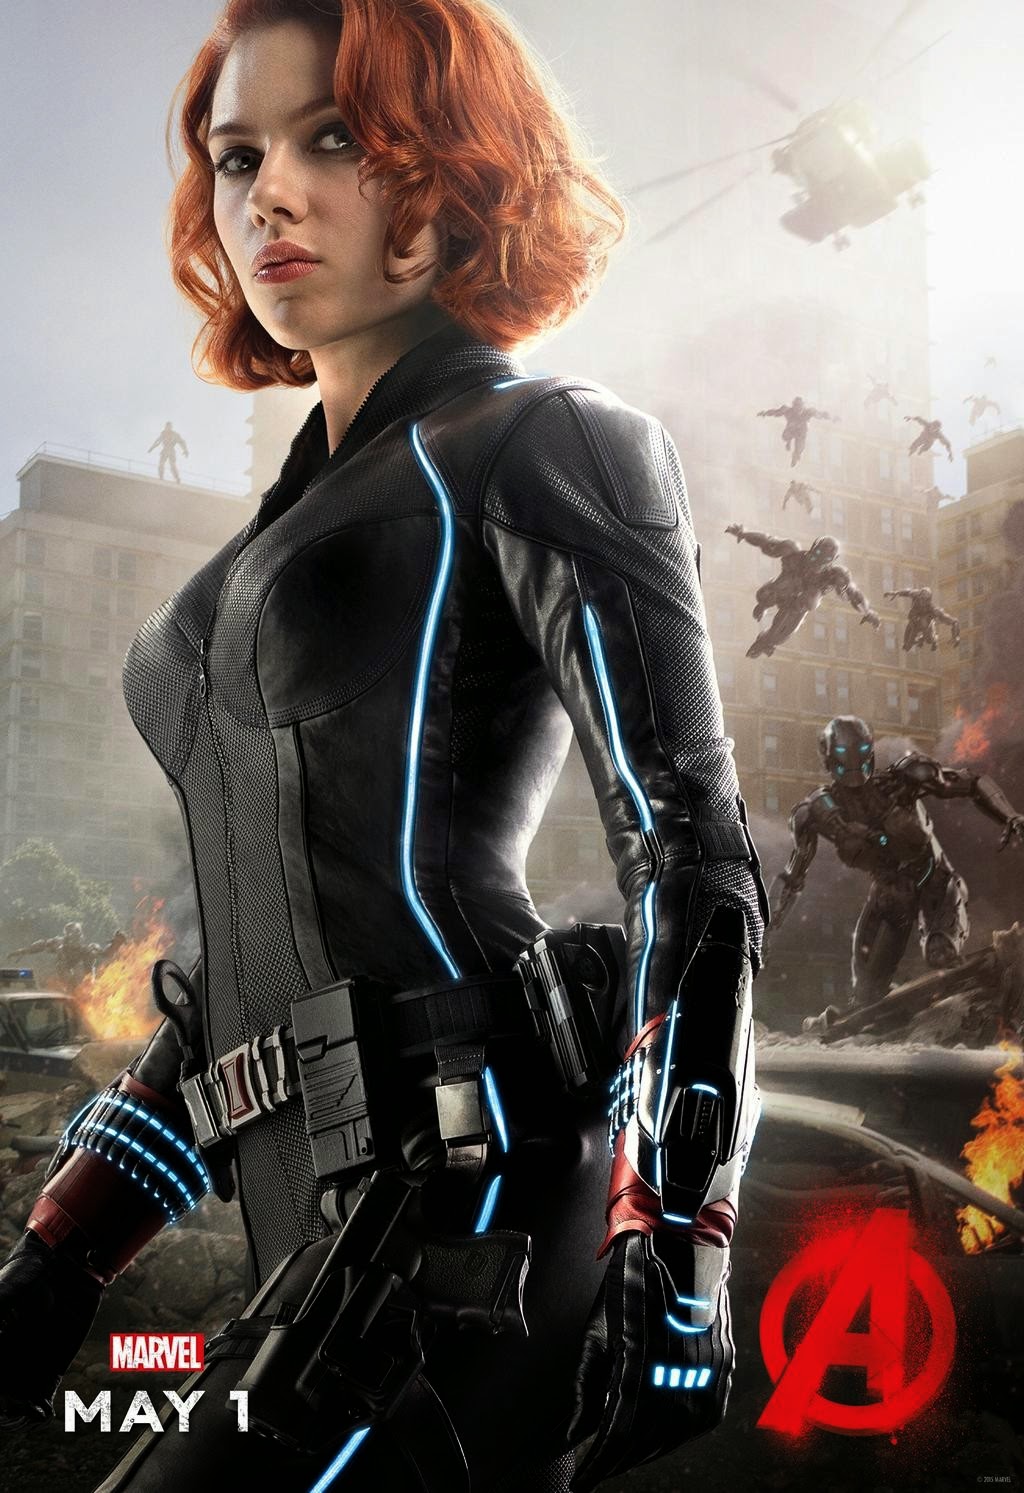 Marvel’s Avengers Age of Ultron Character Movie Poster Set - Scarlett Johansson as Black Widow